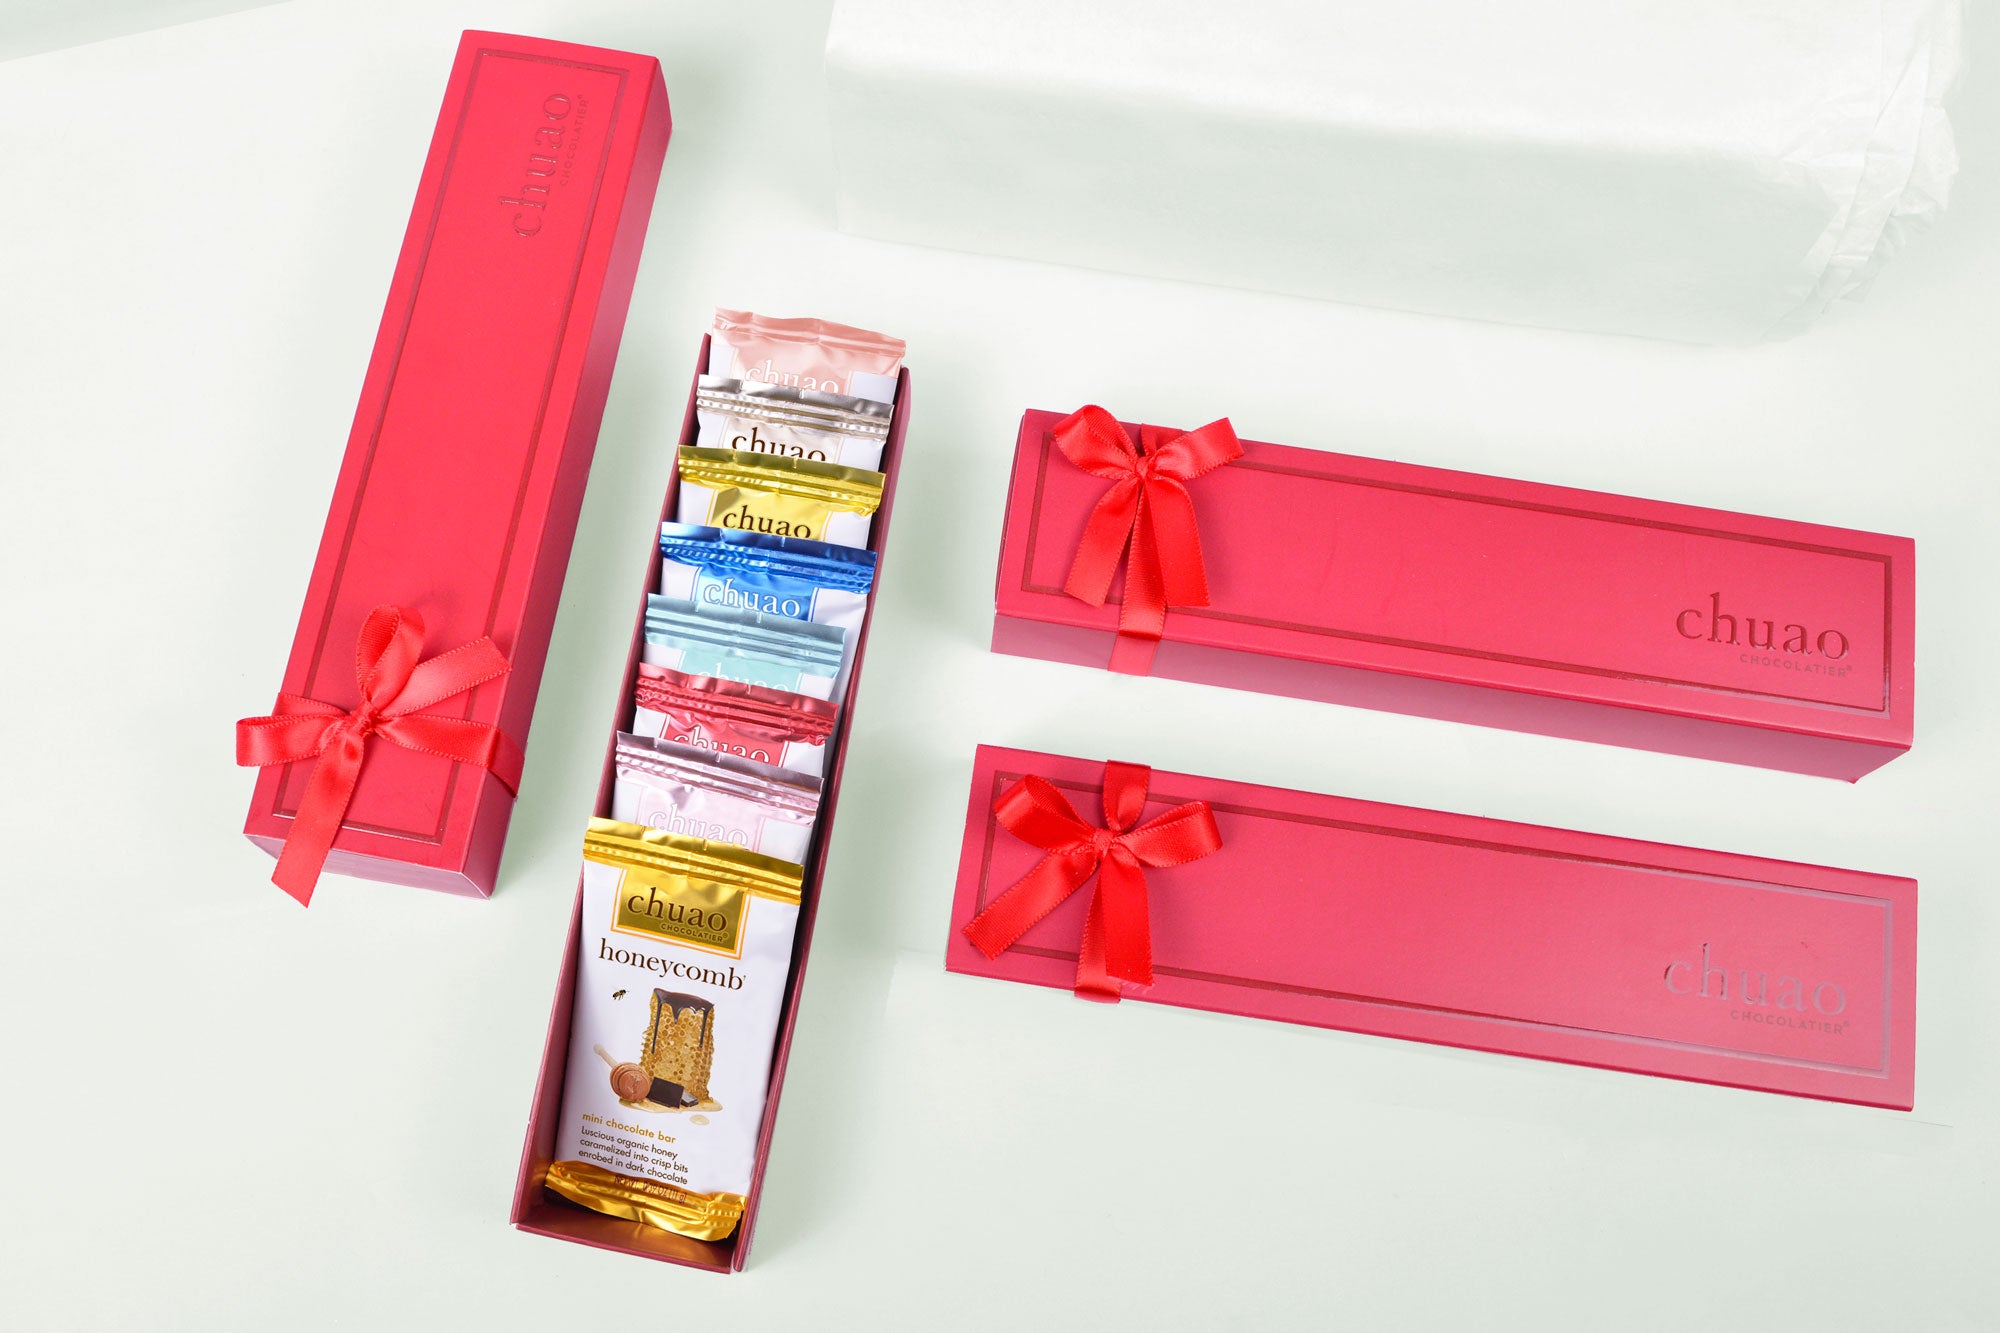 4 taste the joy gift sets, mini chocolate bars